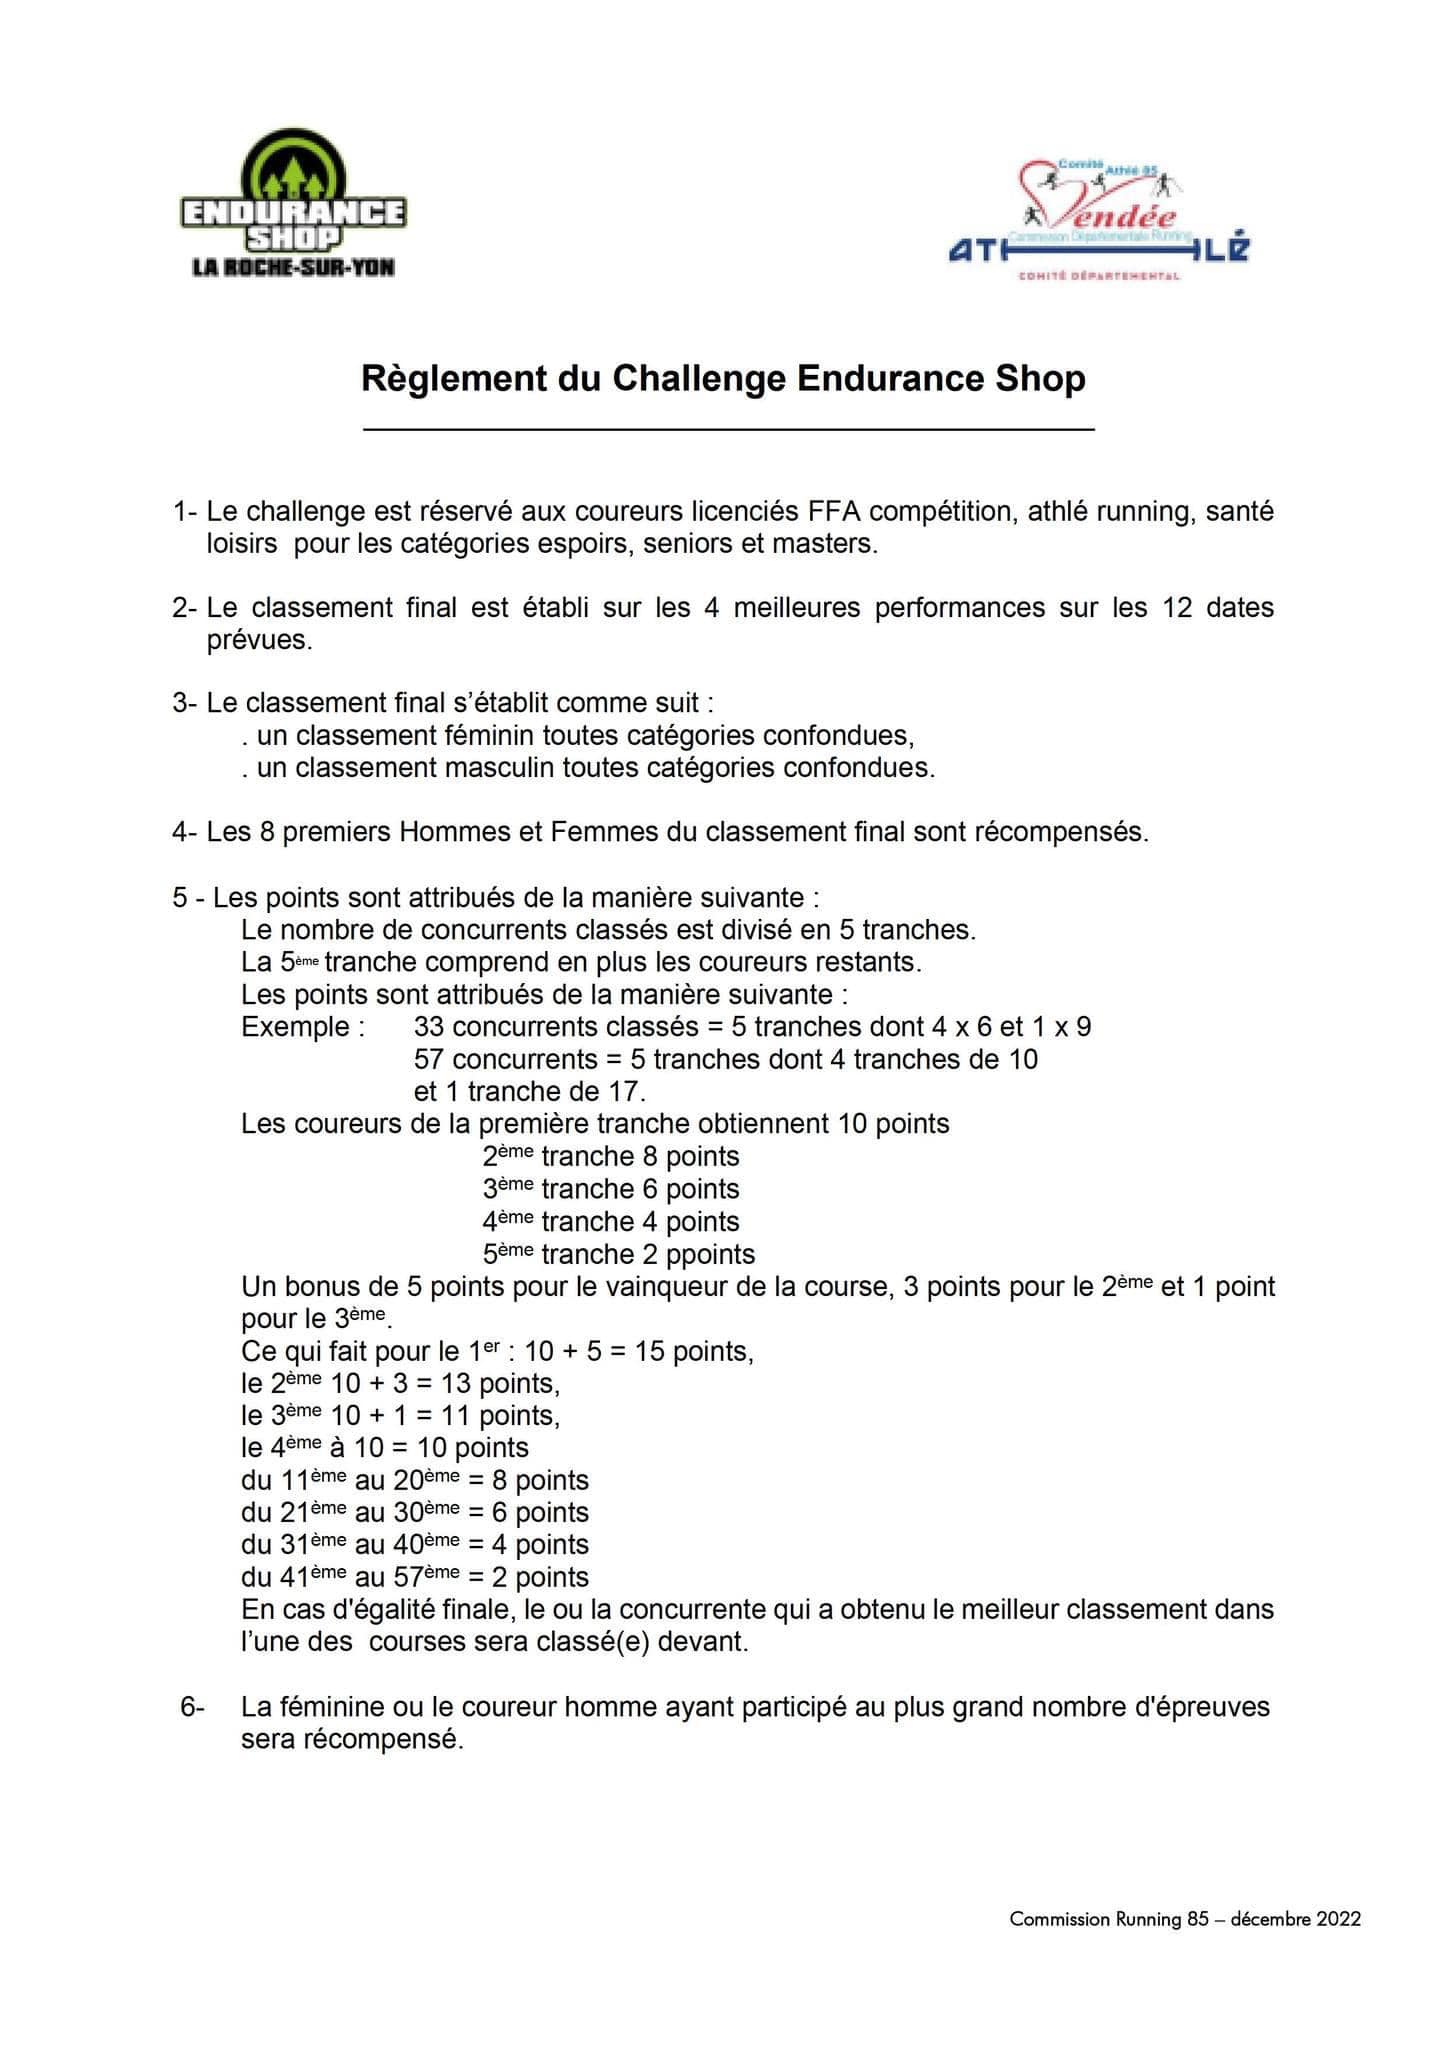 Reeglement_Challenge_Endurance_Shop.jpg